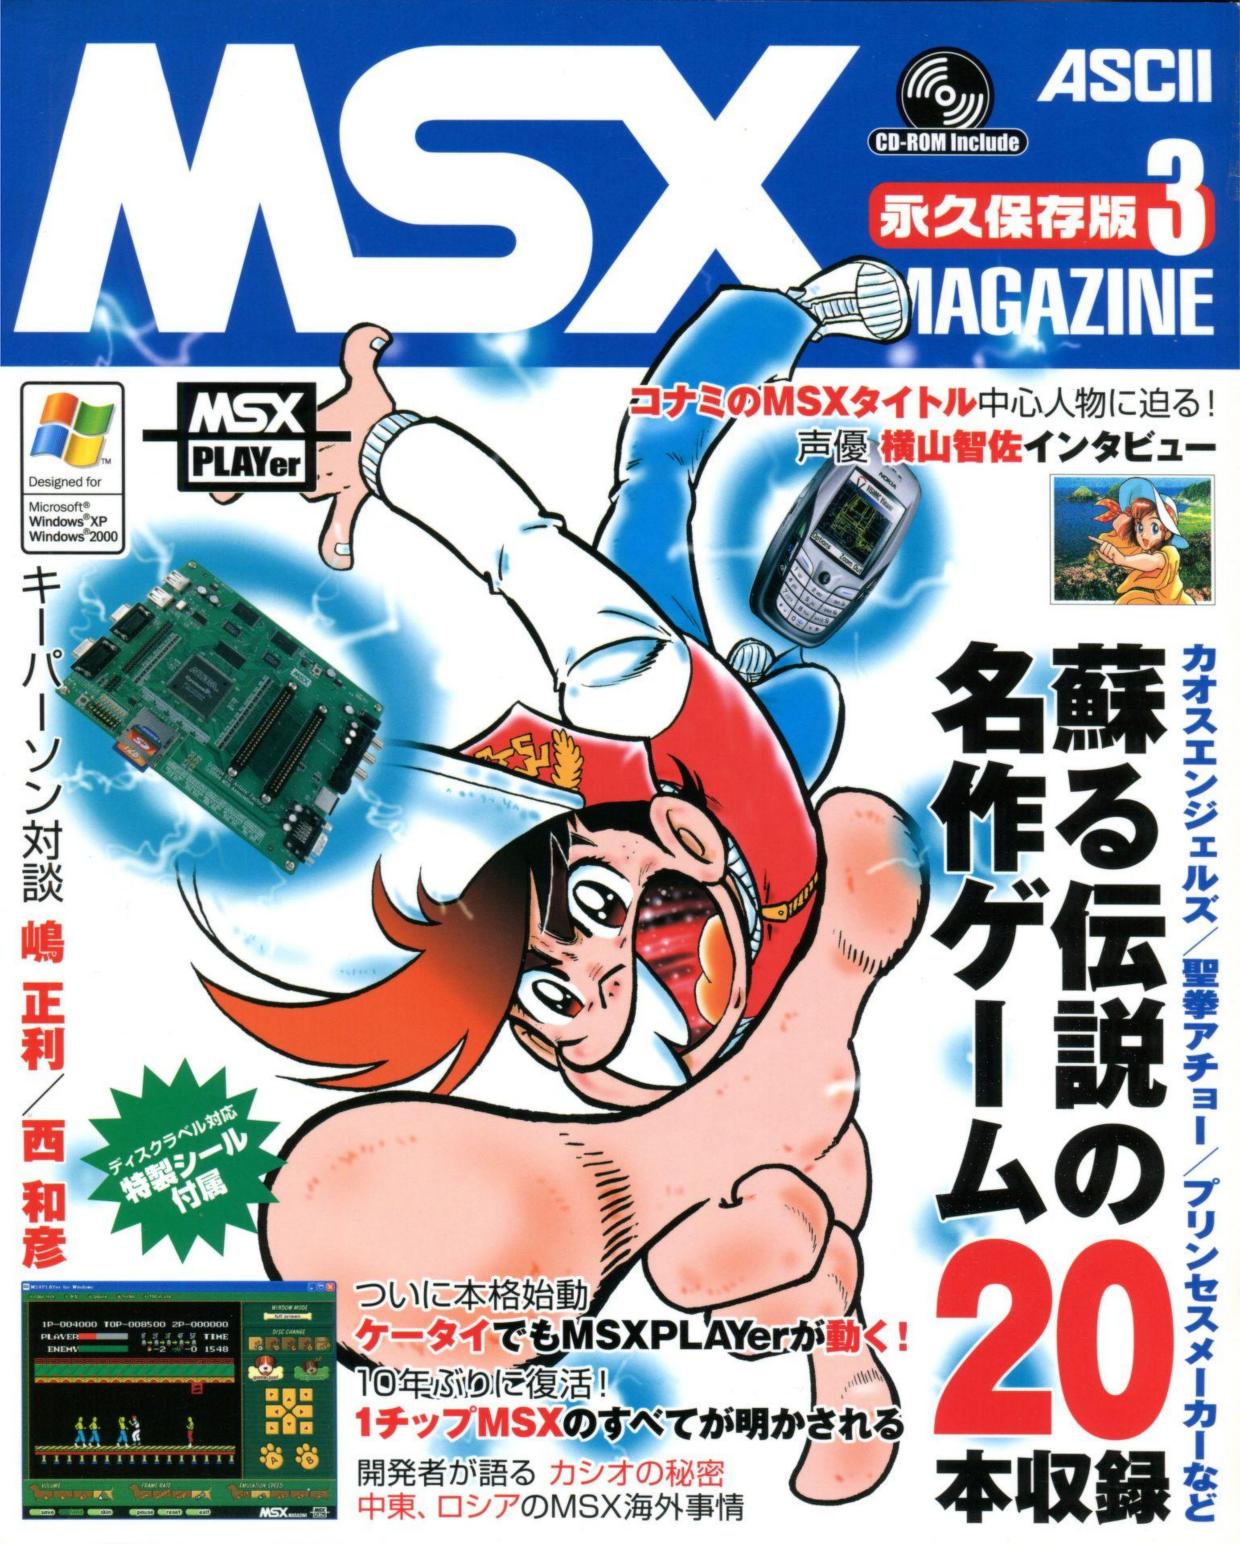 MSX Magazine Revival Vol. 3 - MSX MAGAZINE 永久保存版3 : Free 